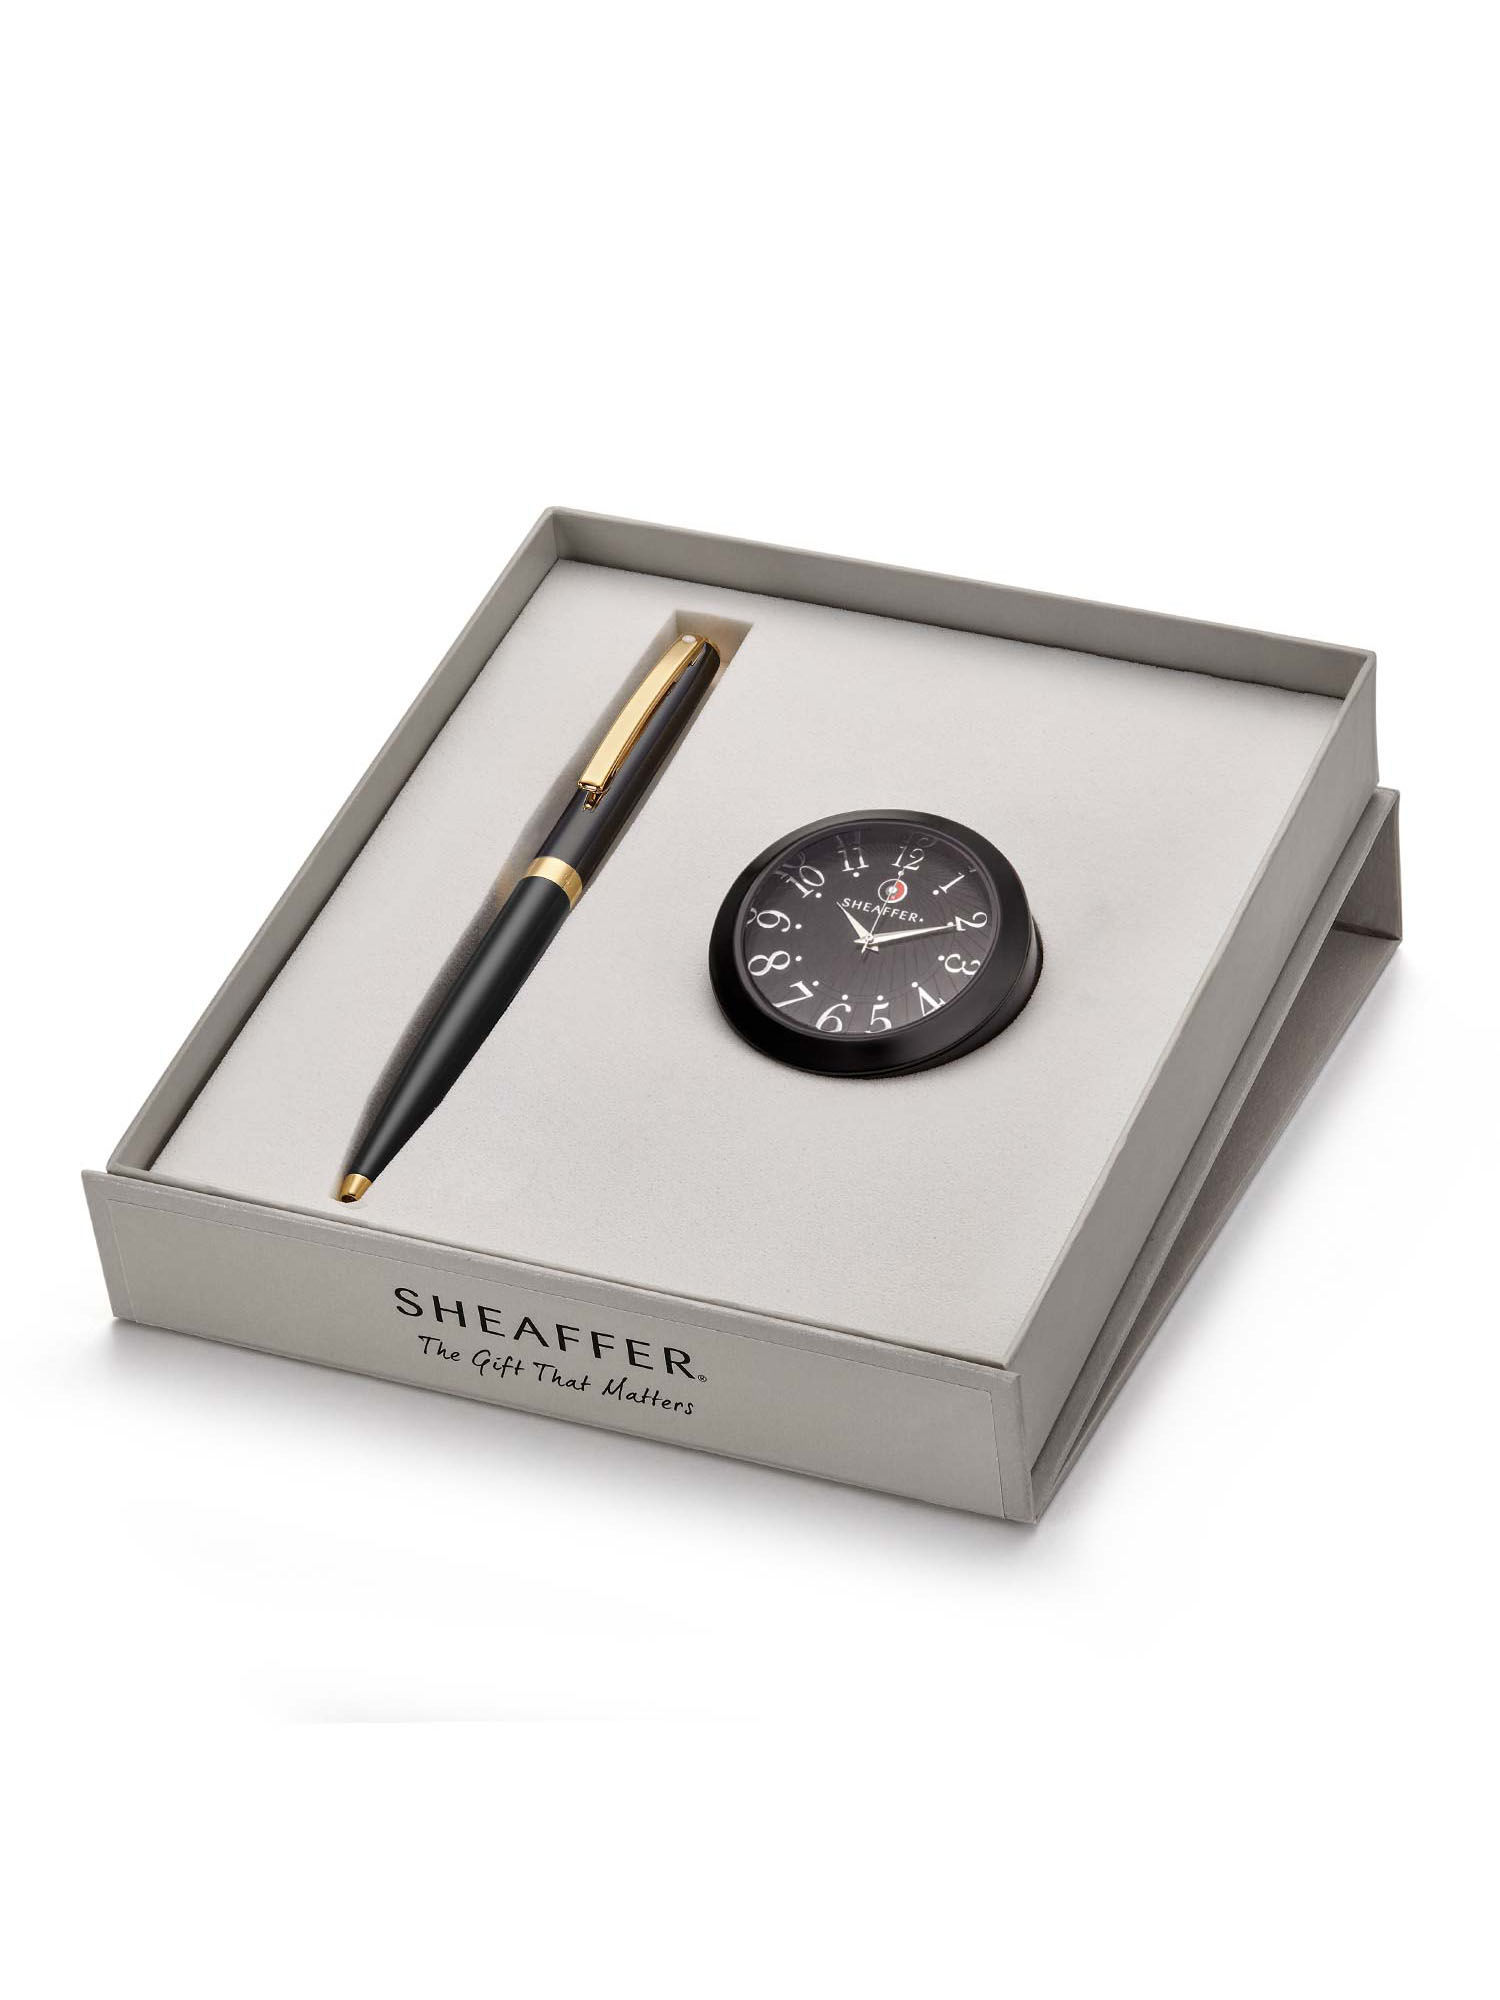 Sheaffer 9471 Sagaris Ballpoint Pen - Black with Gold Tone Trim and Black Table Clock Combination